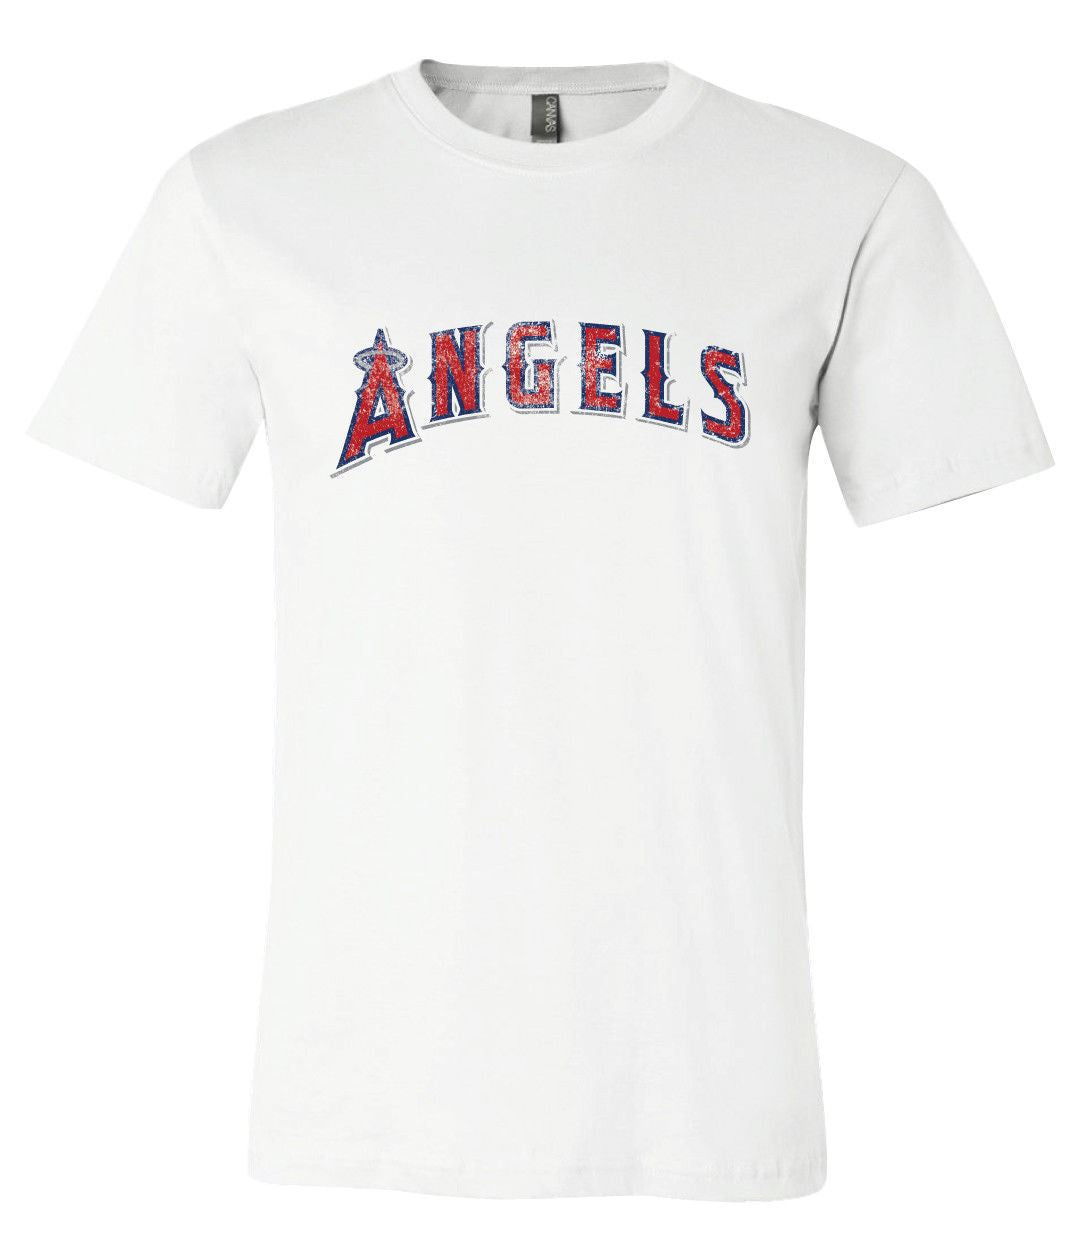 anaheim angels t shirt